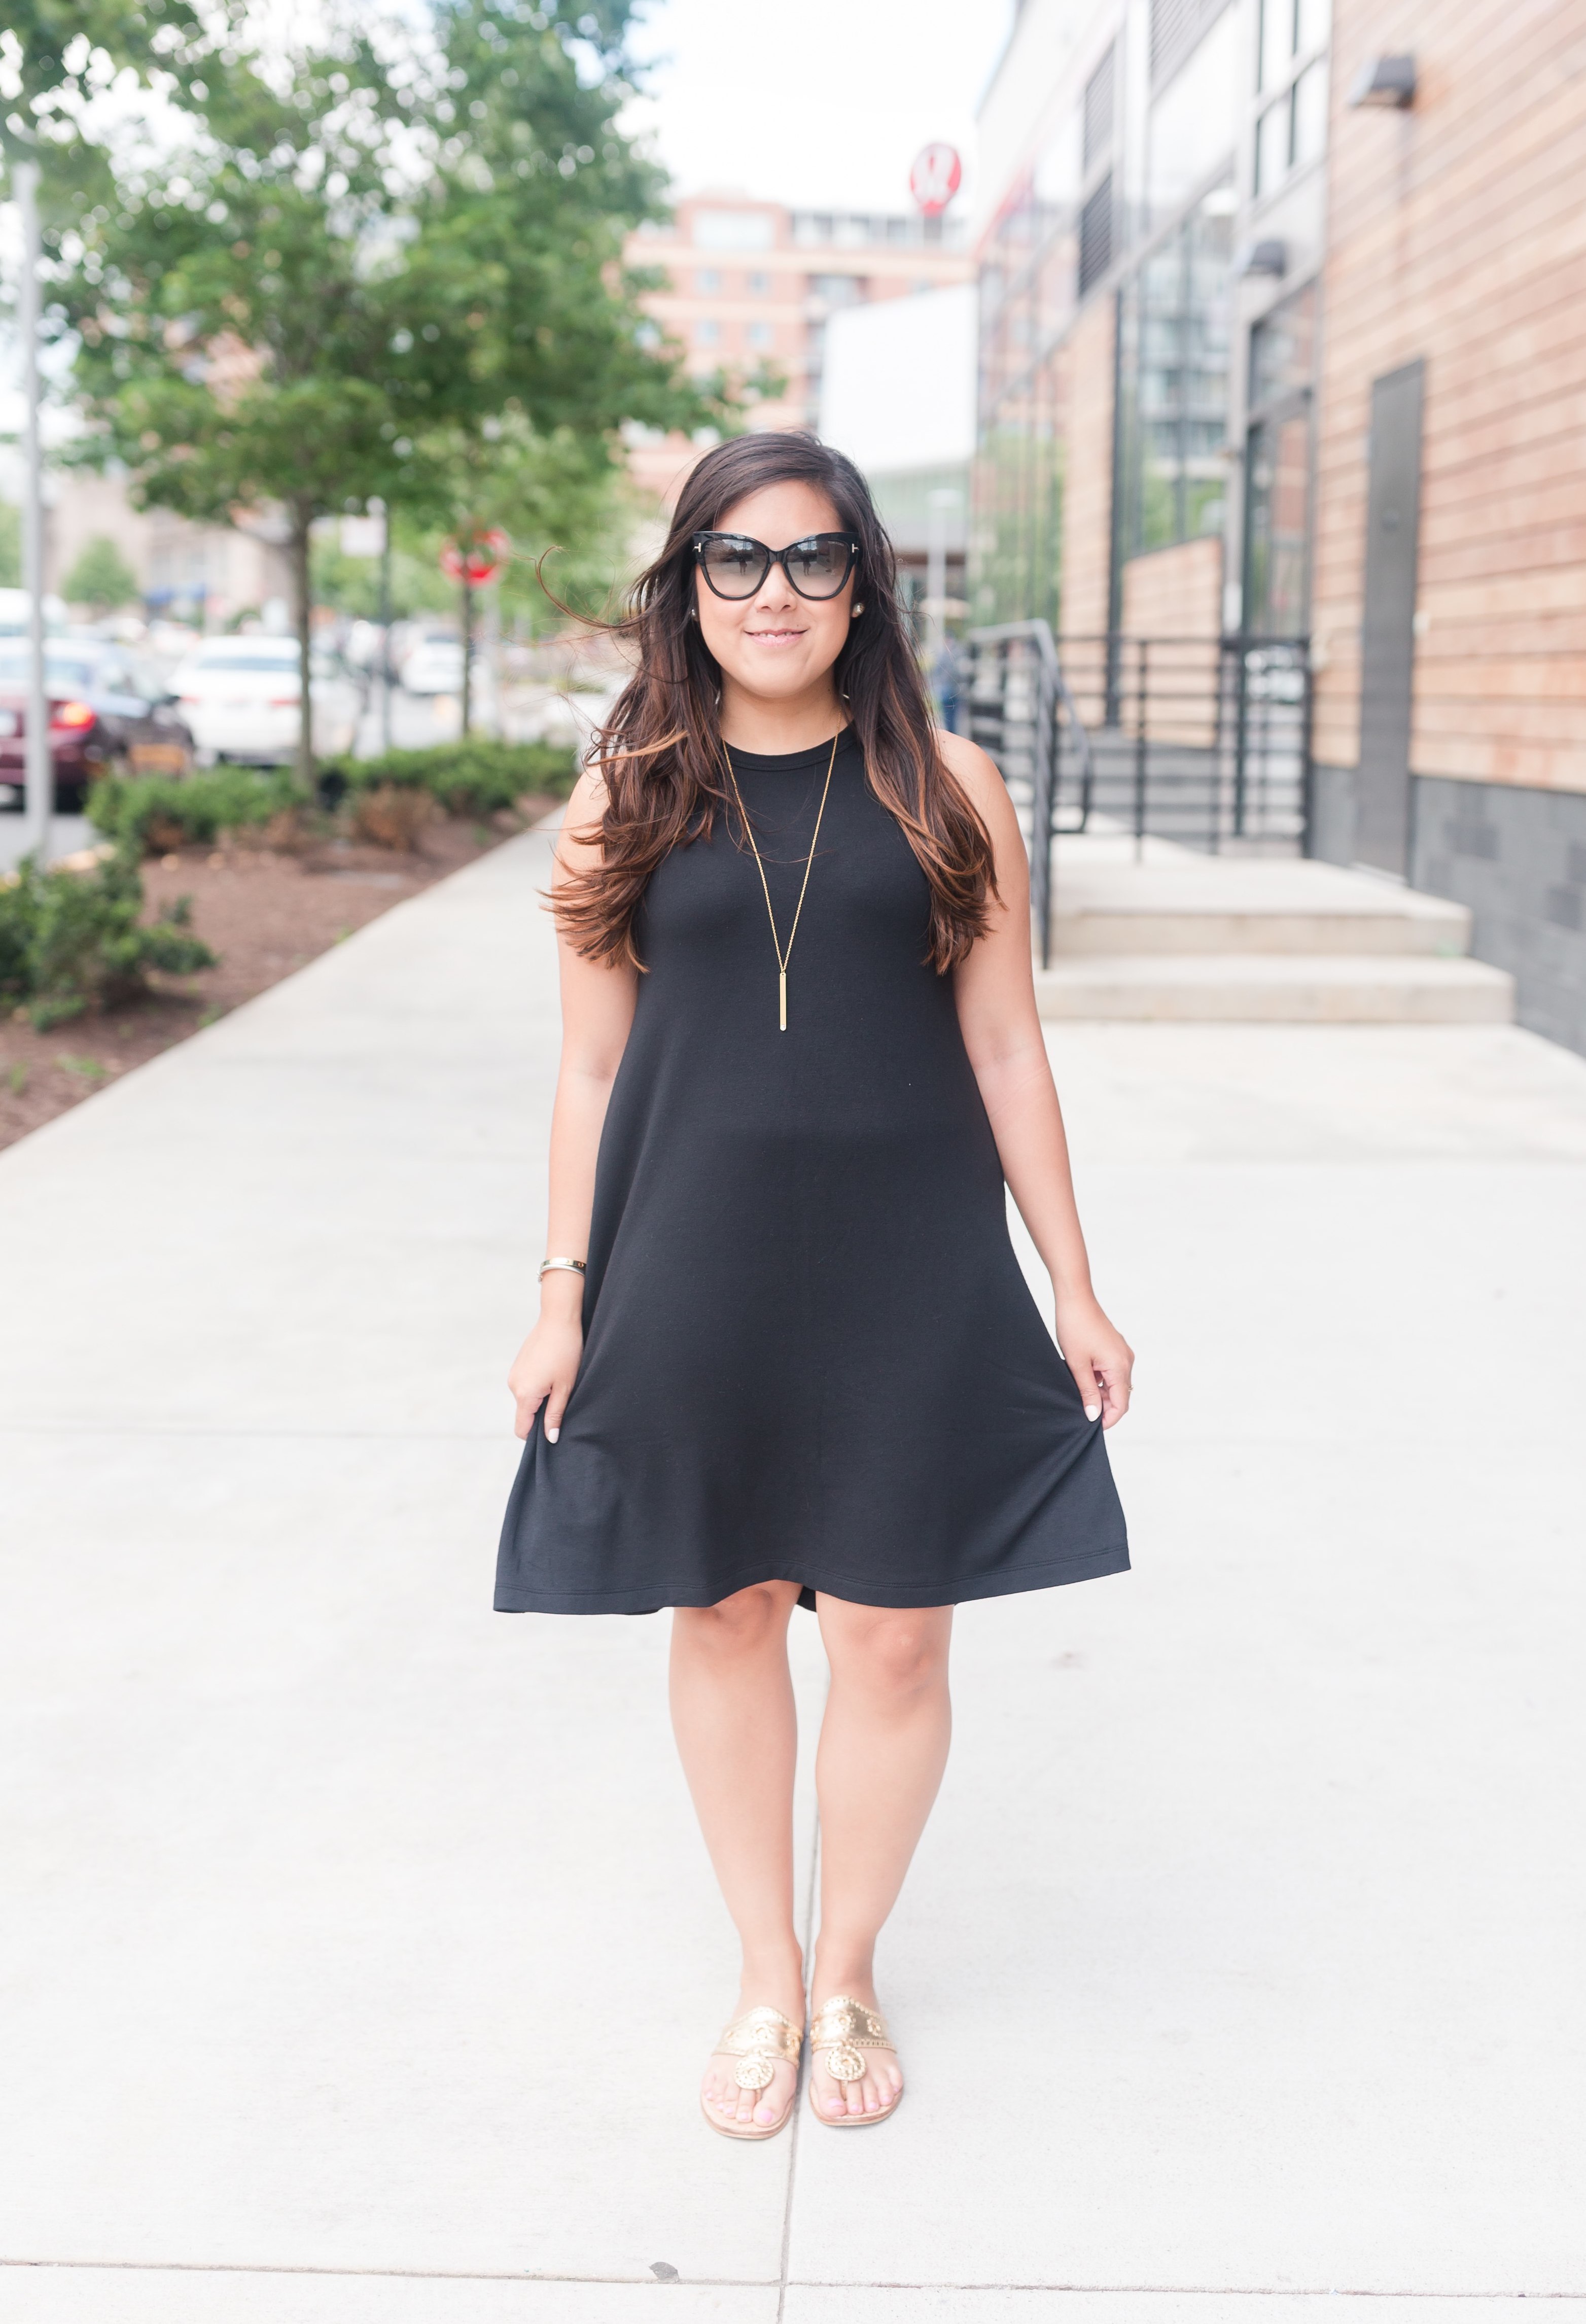 Basic Black Tank Dress, Styled 3 Ways - Stylista Esquire - @stylistaesquire